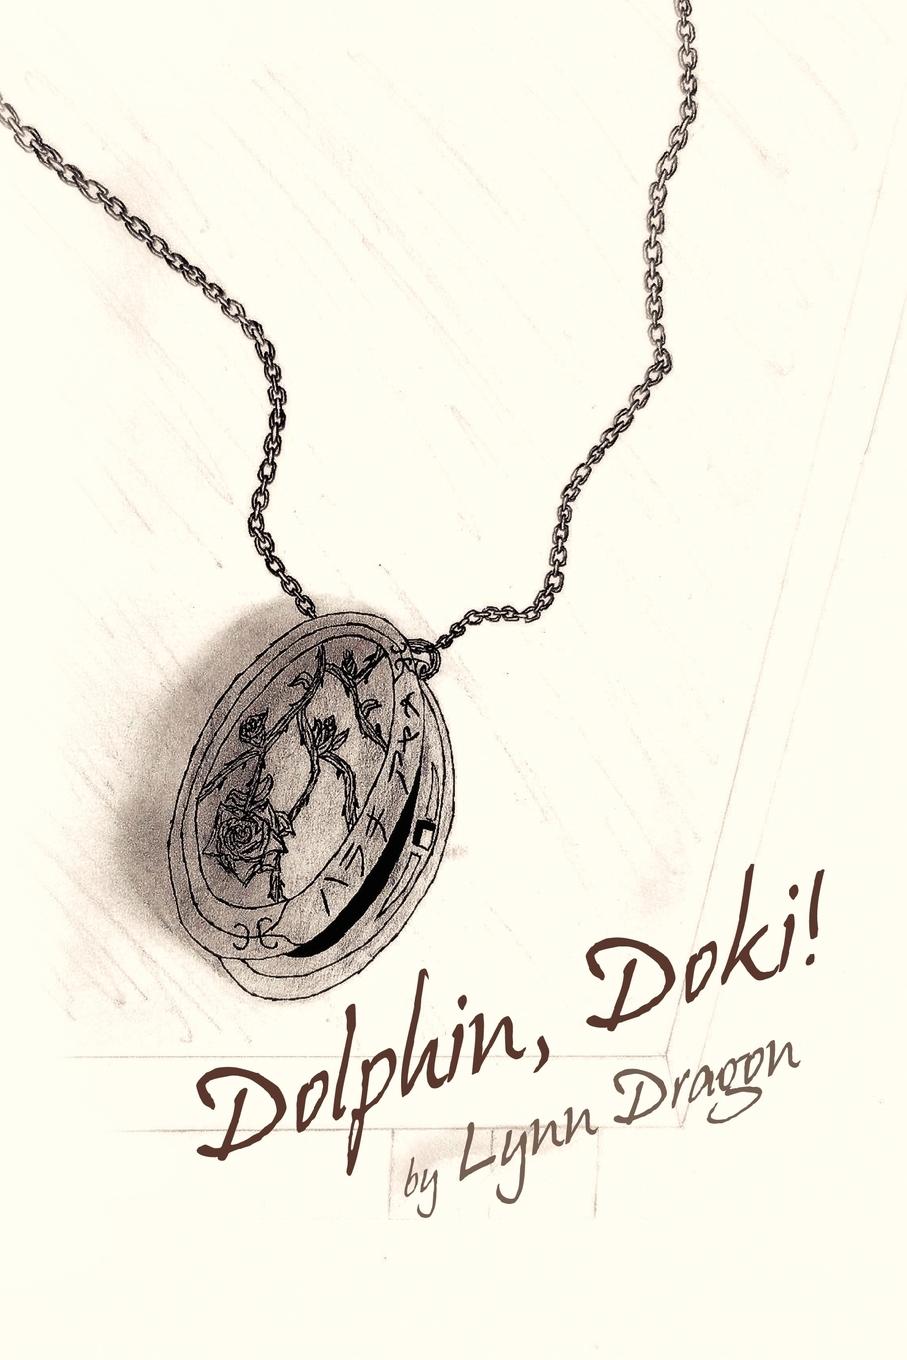 Dolphin, Doki! - Dragon, Lynn